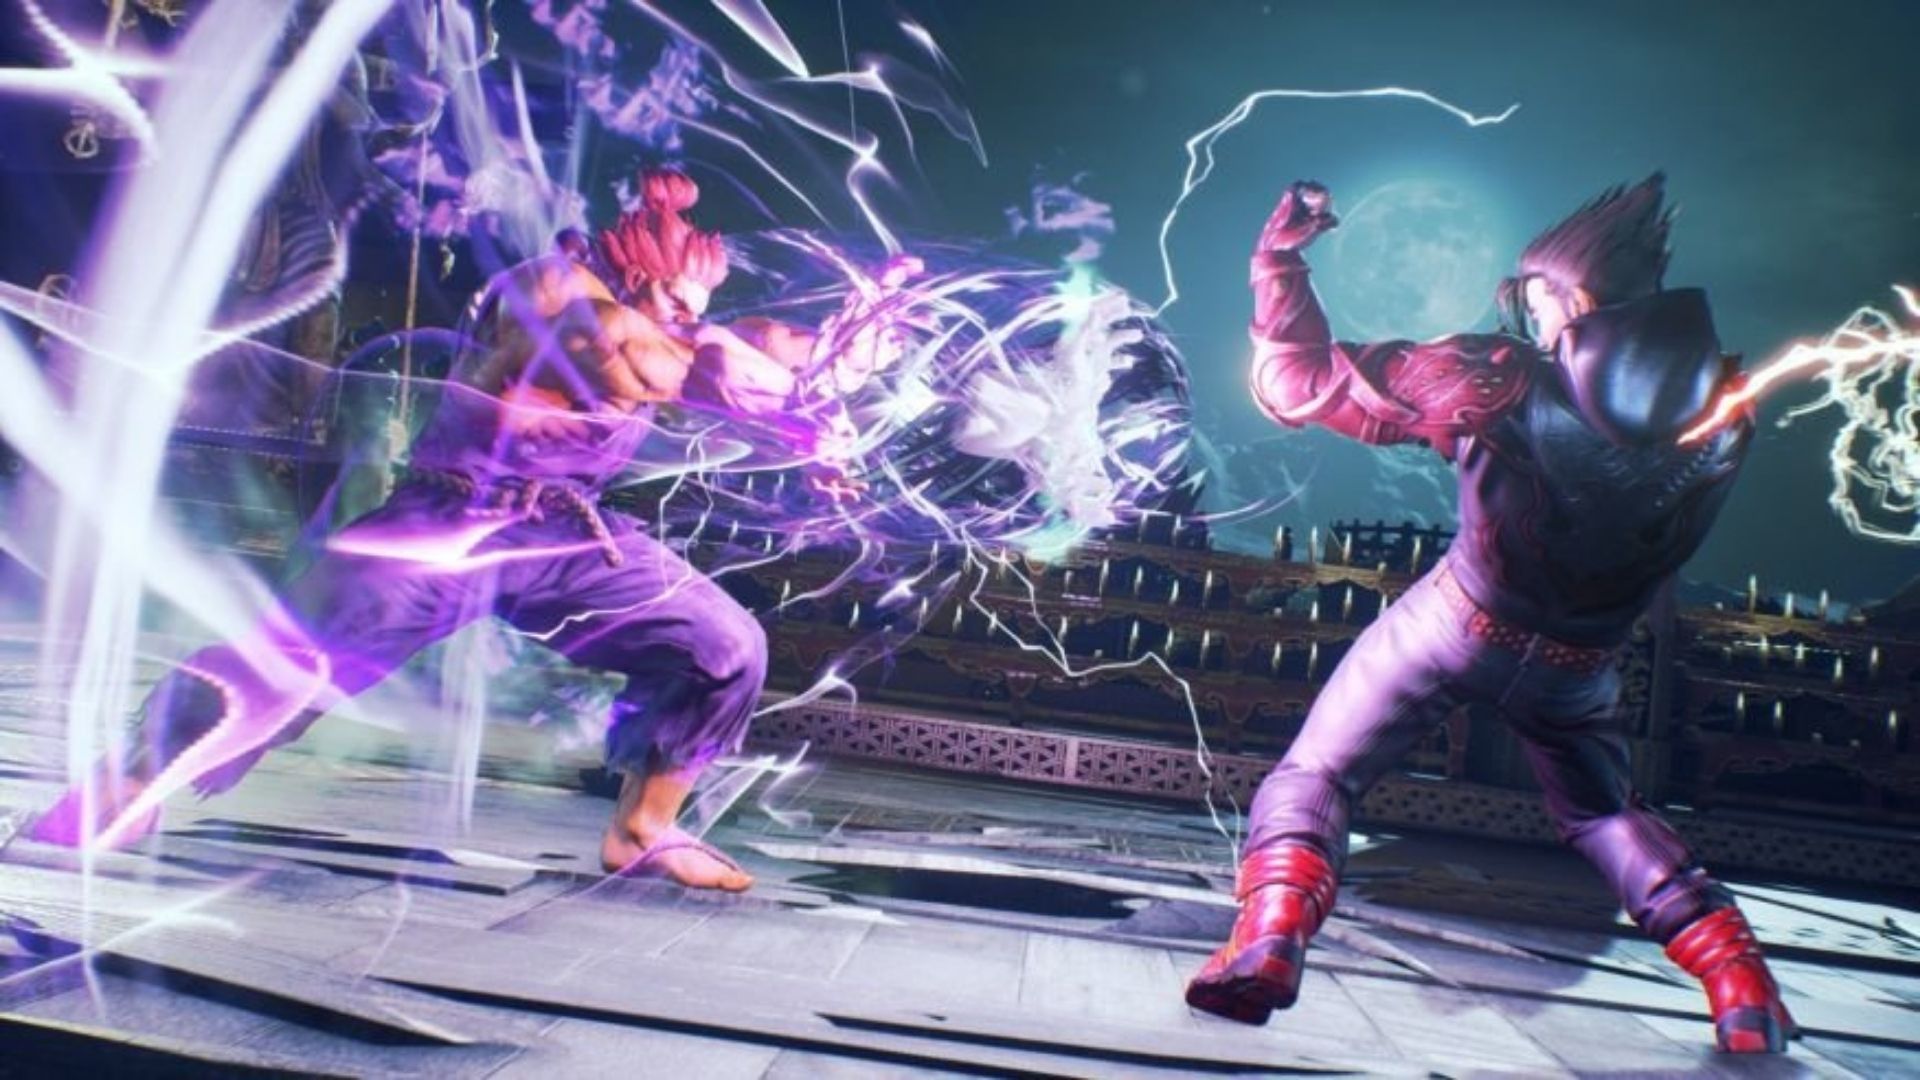 As grandes rivalidades de Tekken fora da família Mishima - Versus